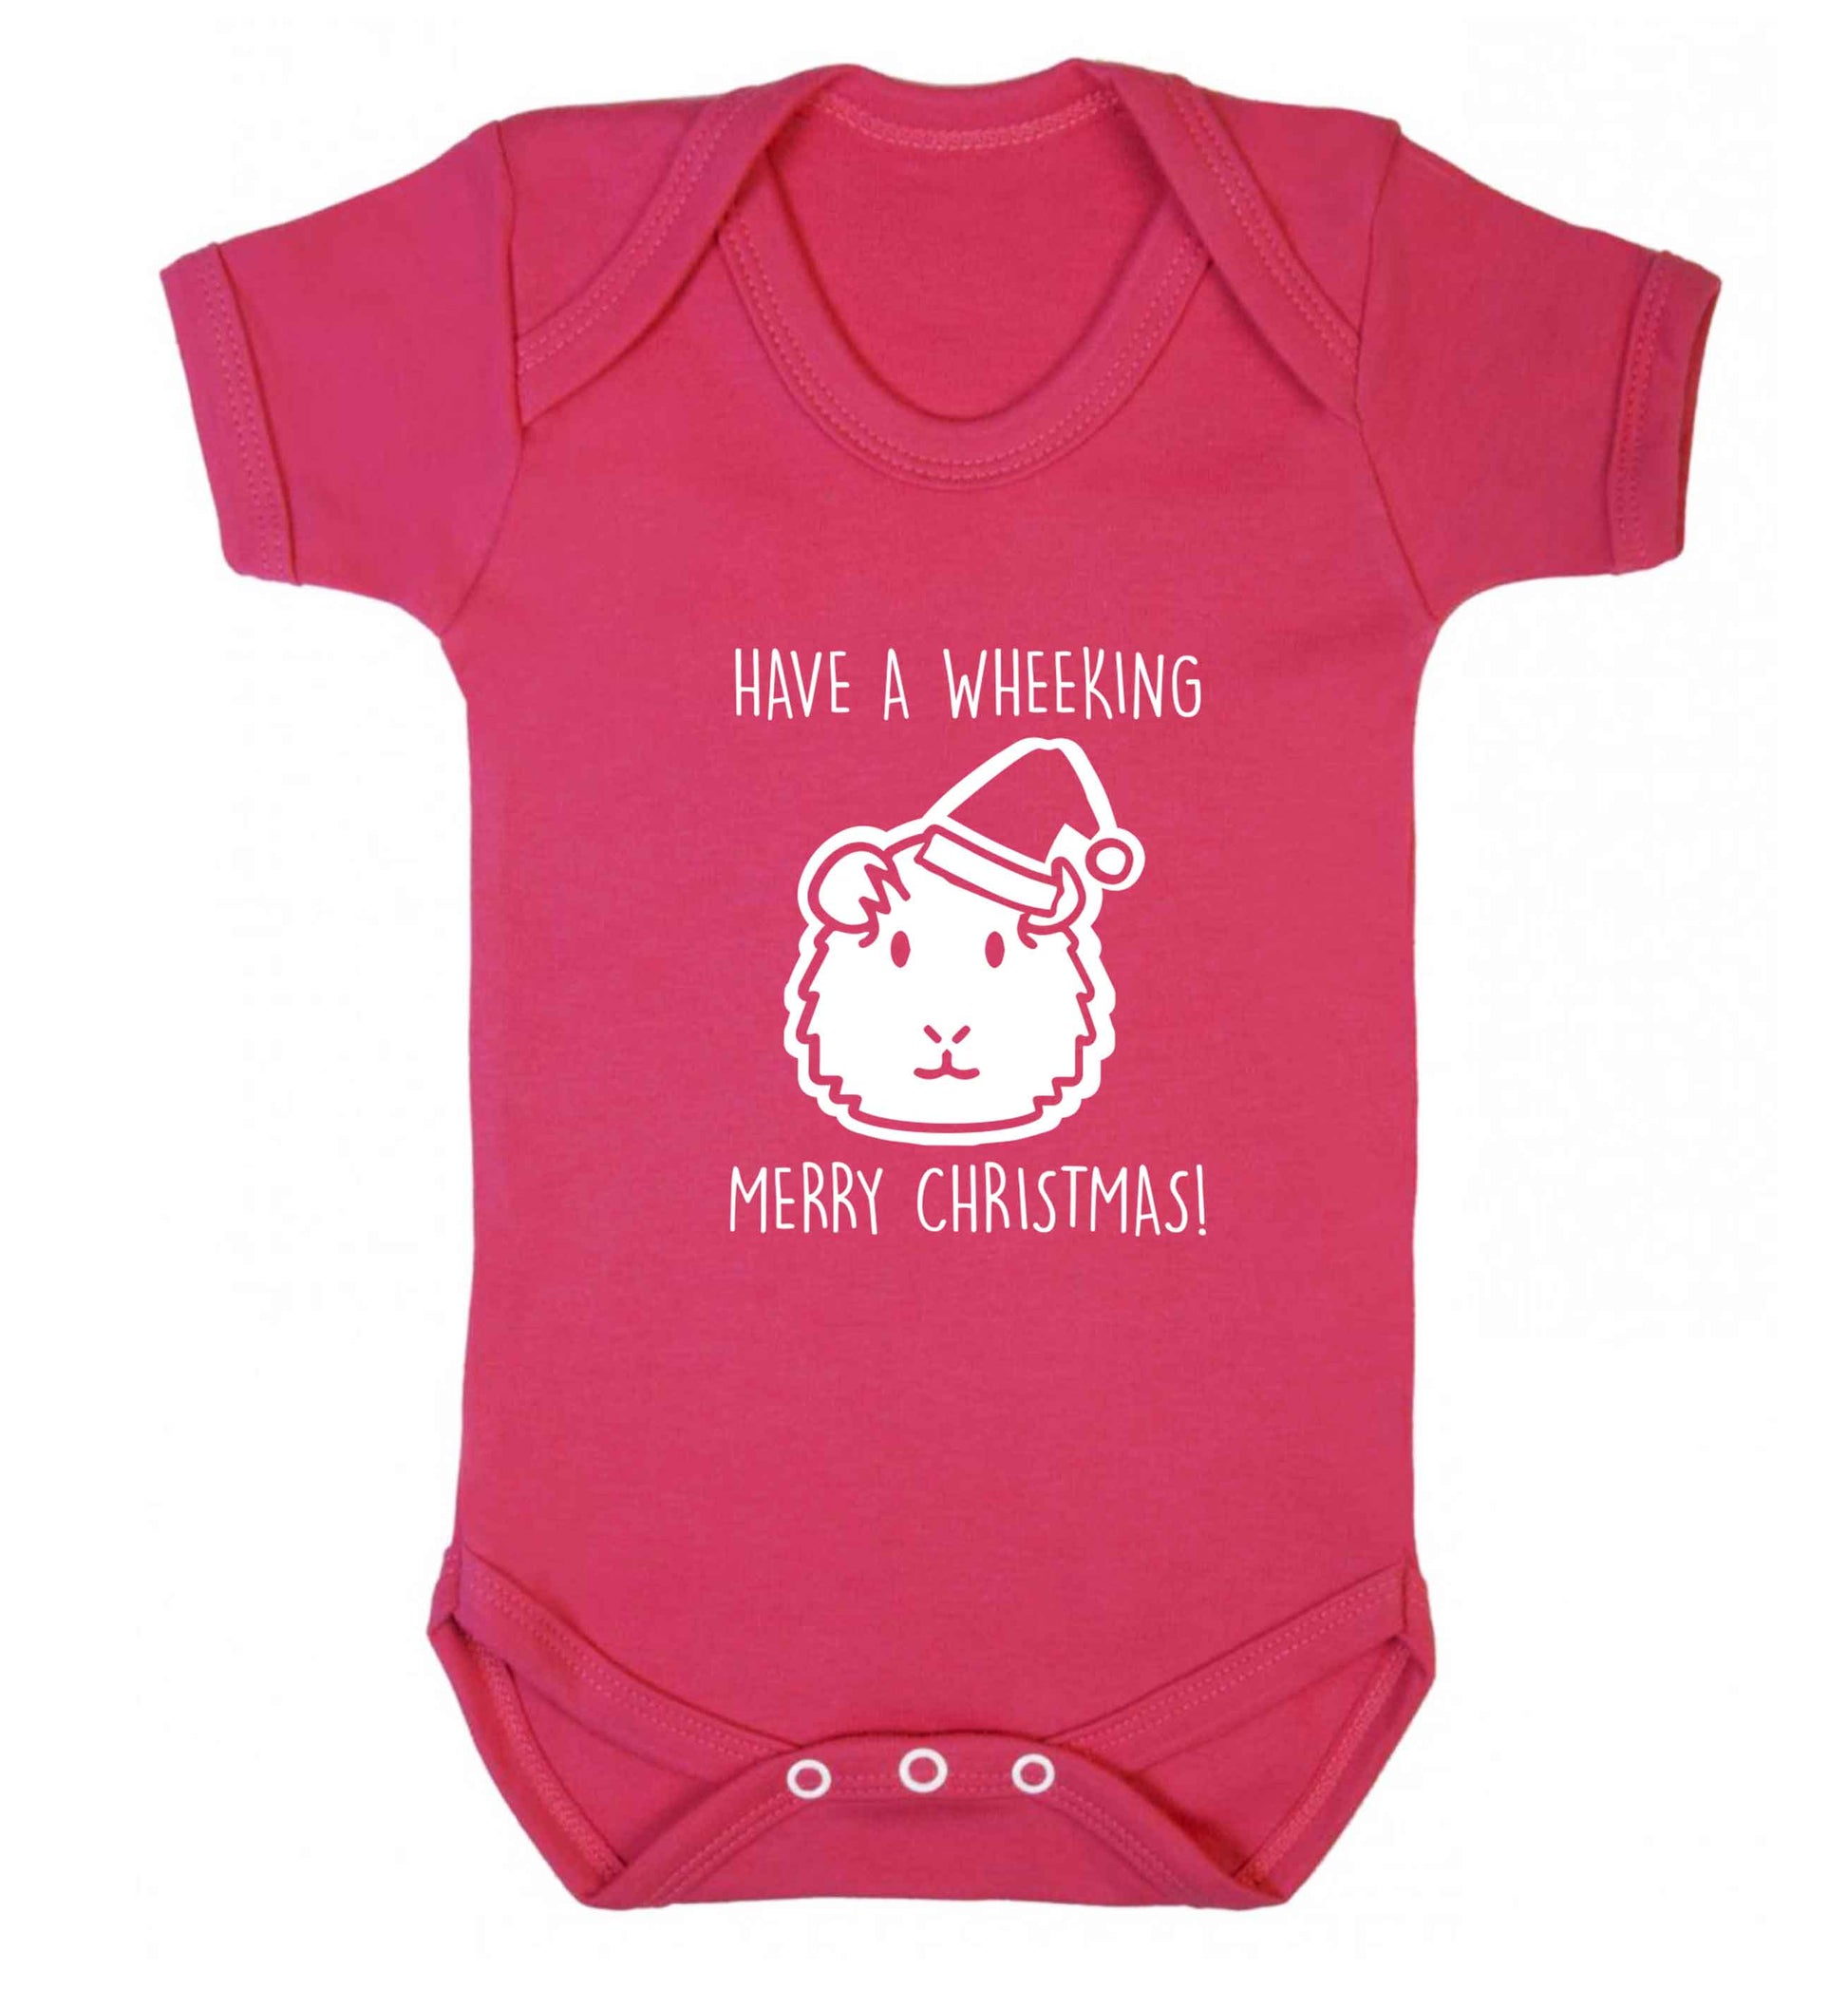 Have a wheeking merry Christmas baby vest dark pink 18-24 months